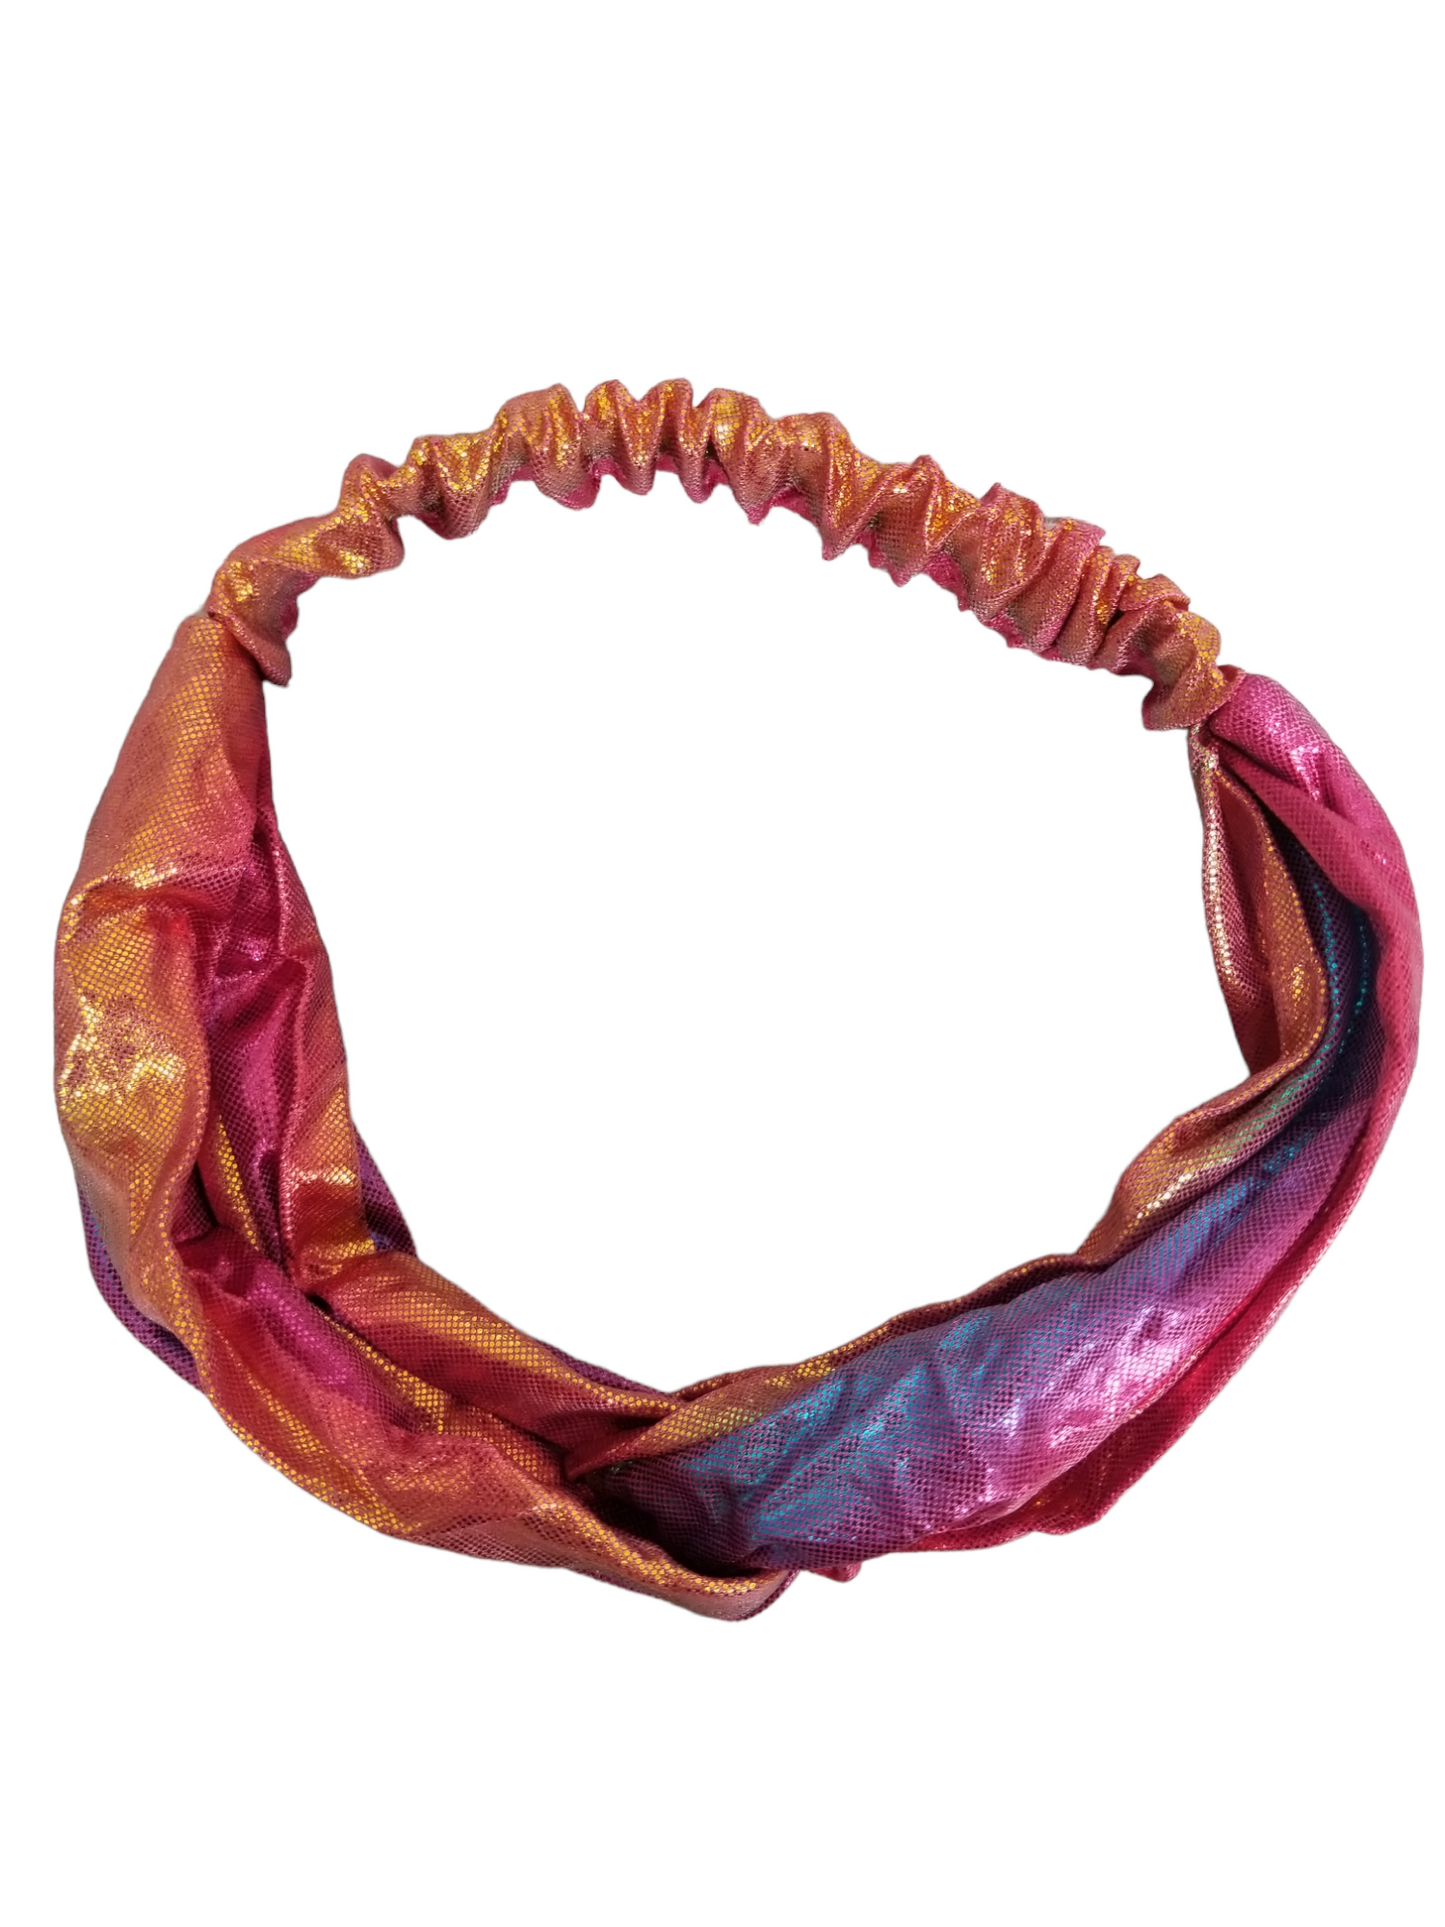 FROG SAC Metallic Mermaid Fabric Knot Headbands for Girls